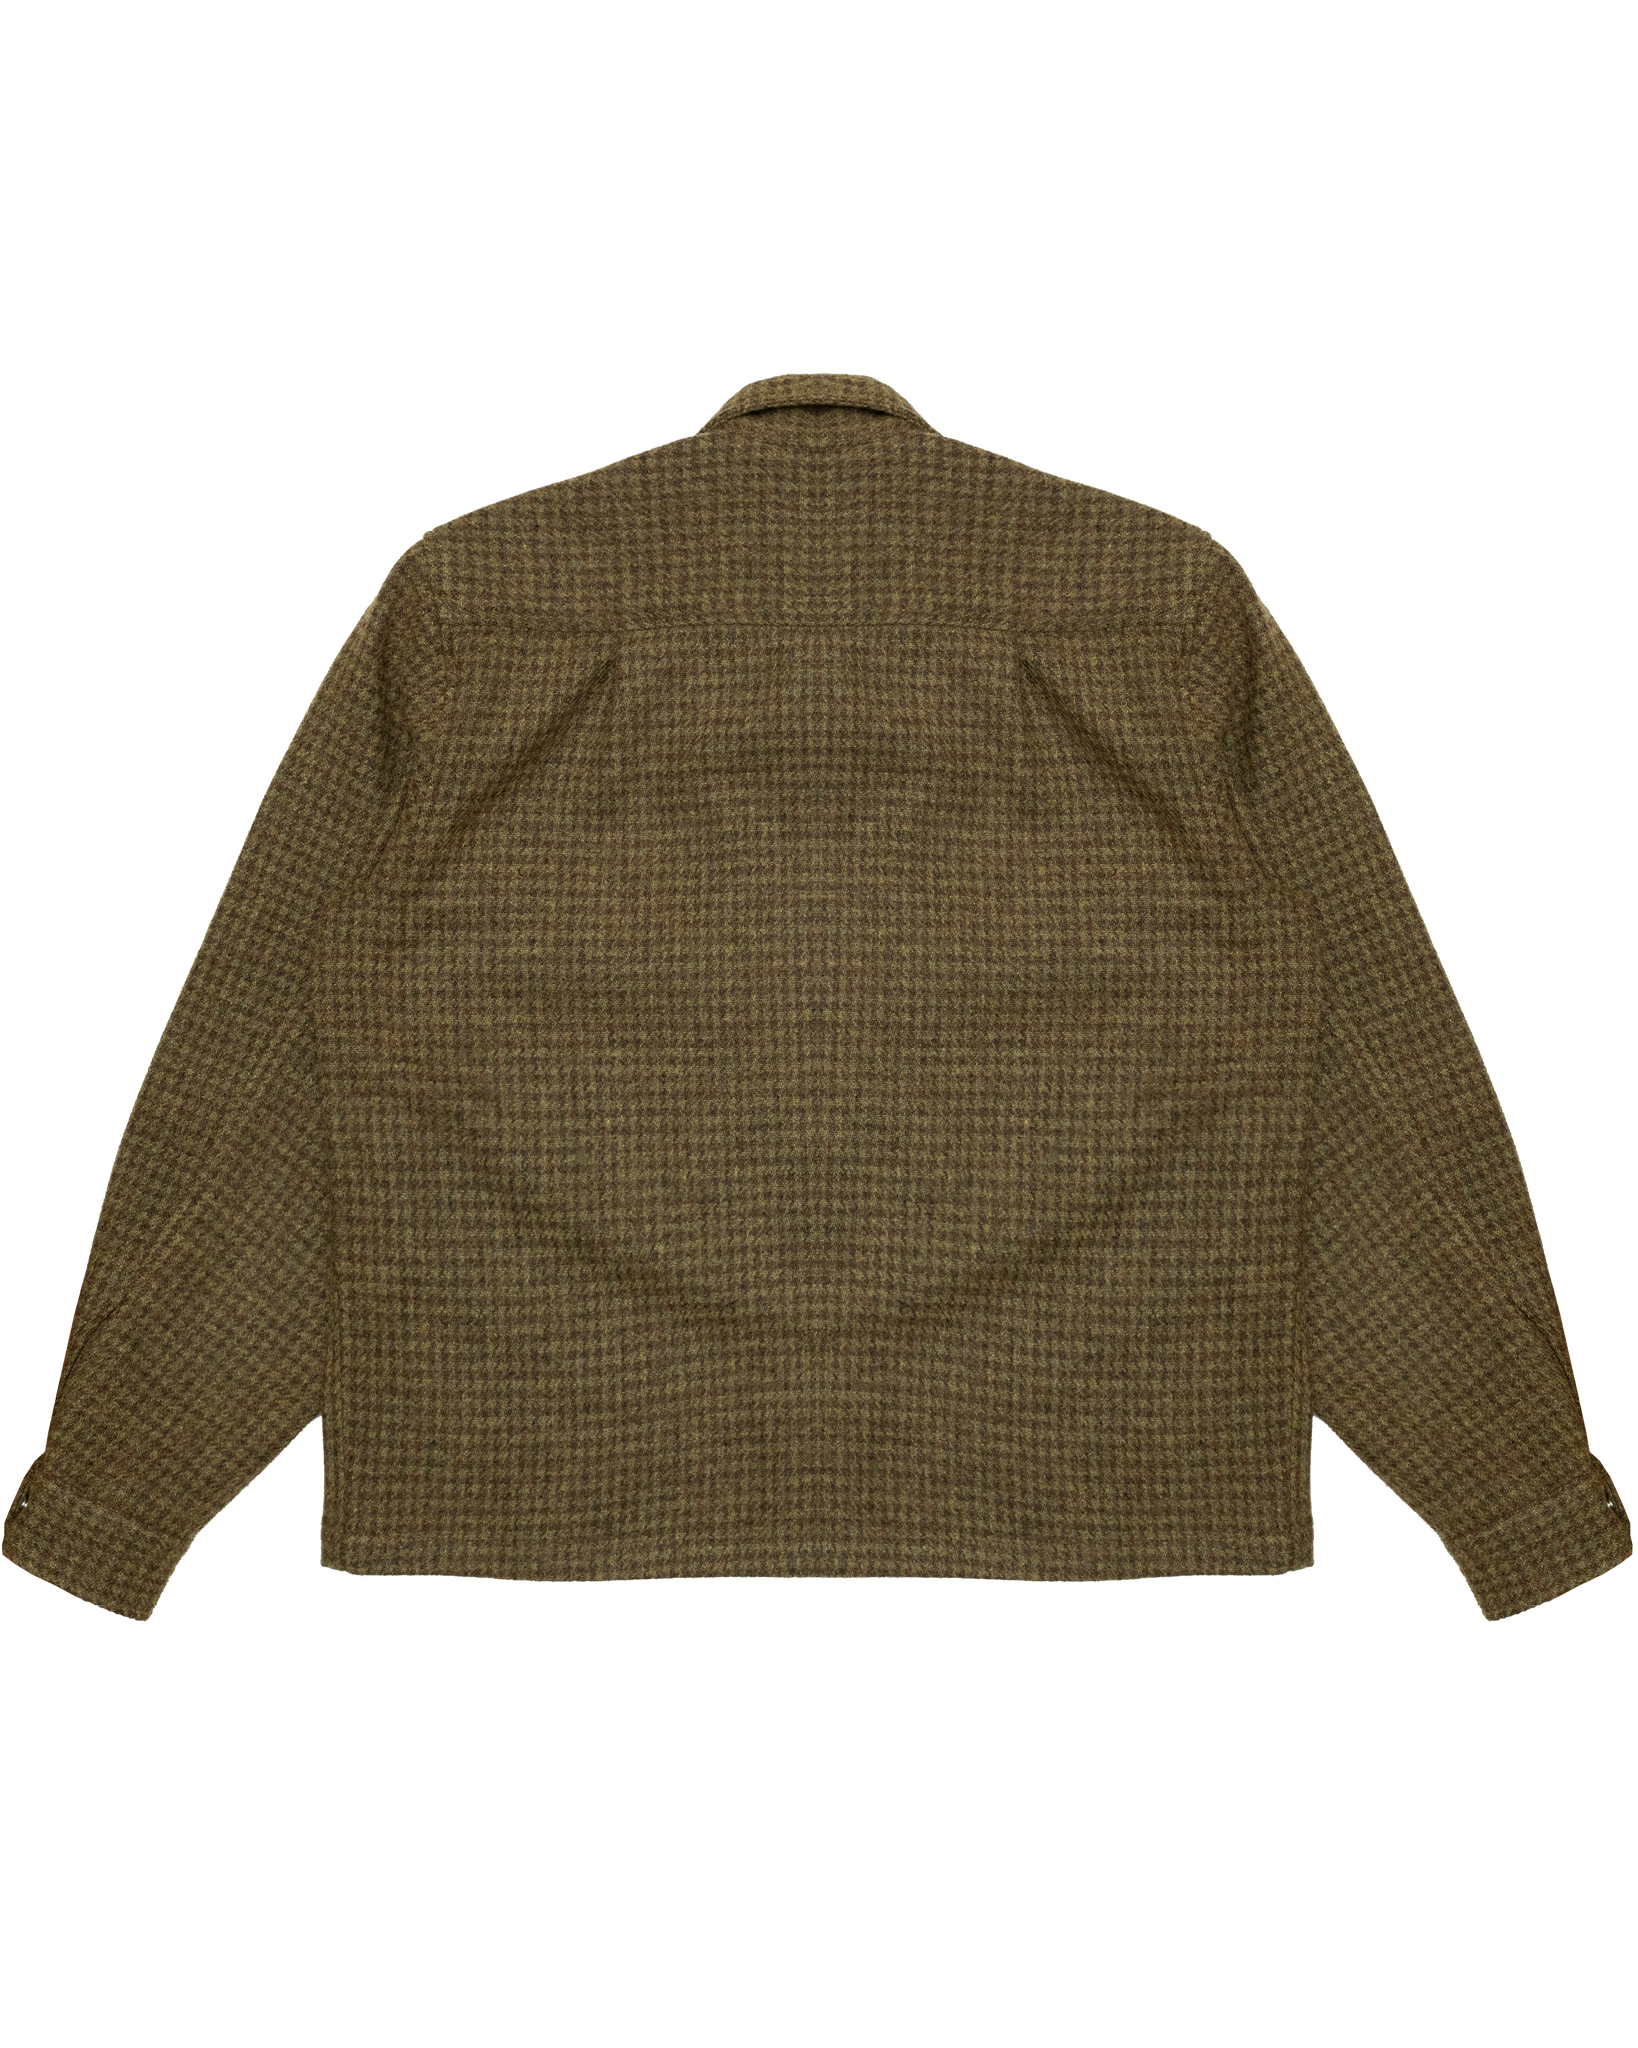 London '68 Jacket: Houndstooth Wool